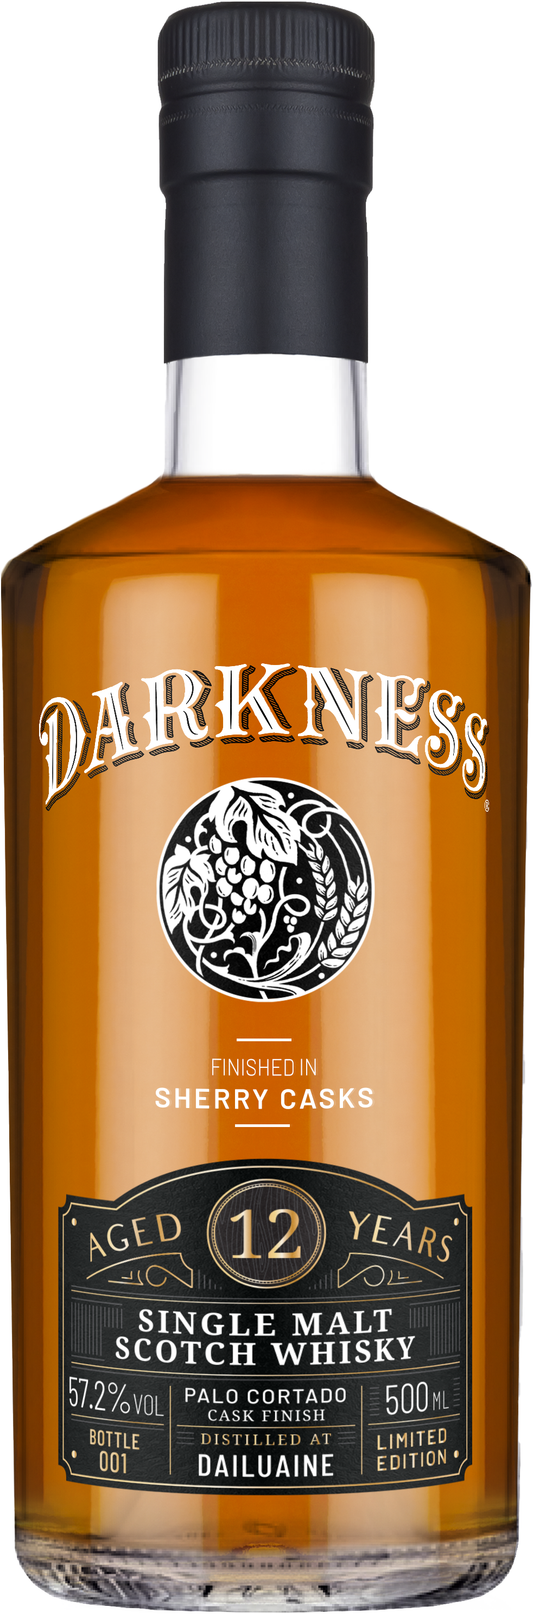 The Darkness Dailuaine 12 Year Palo Cortado Single Malt Scotch Whisky 500ml